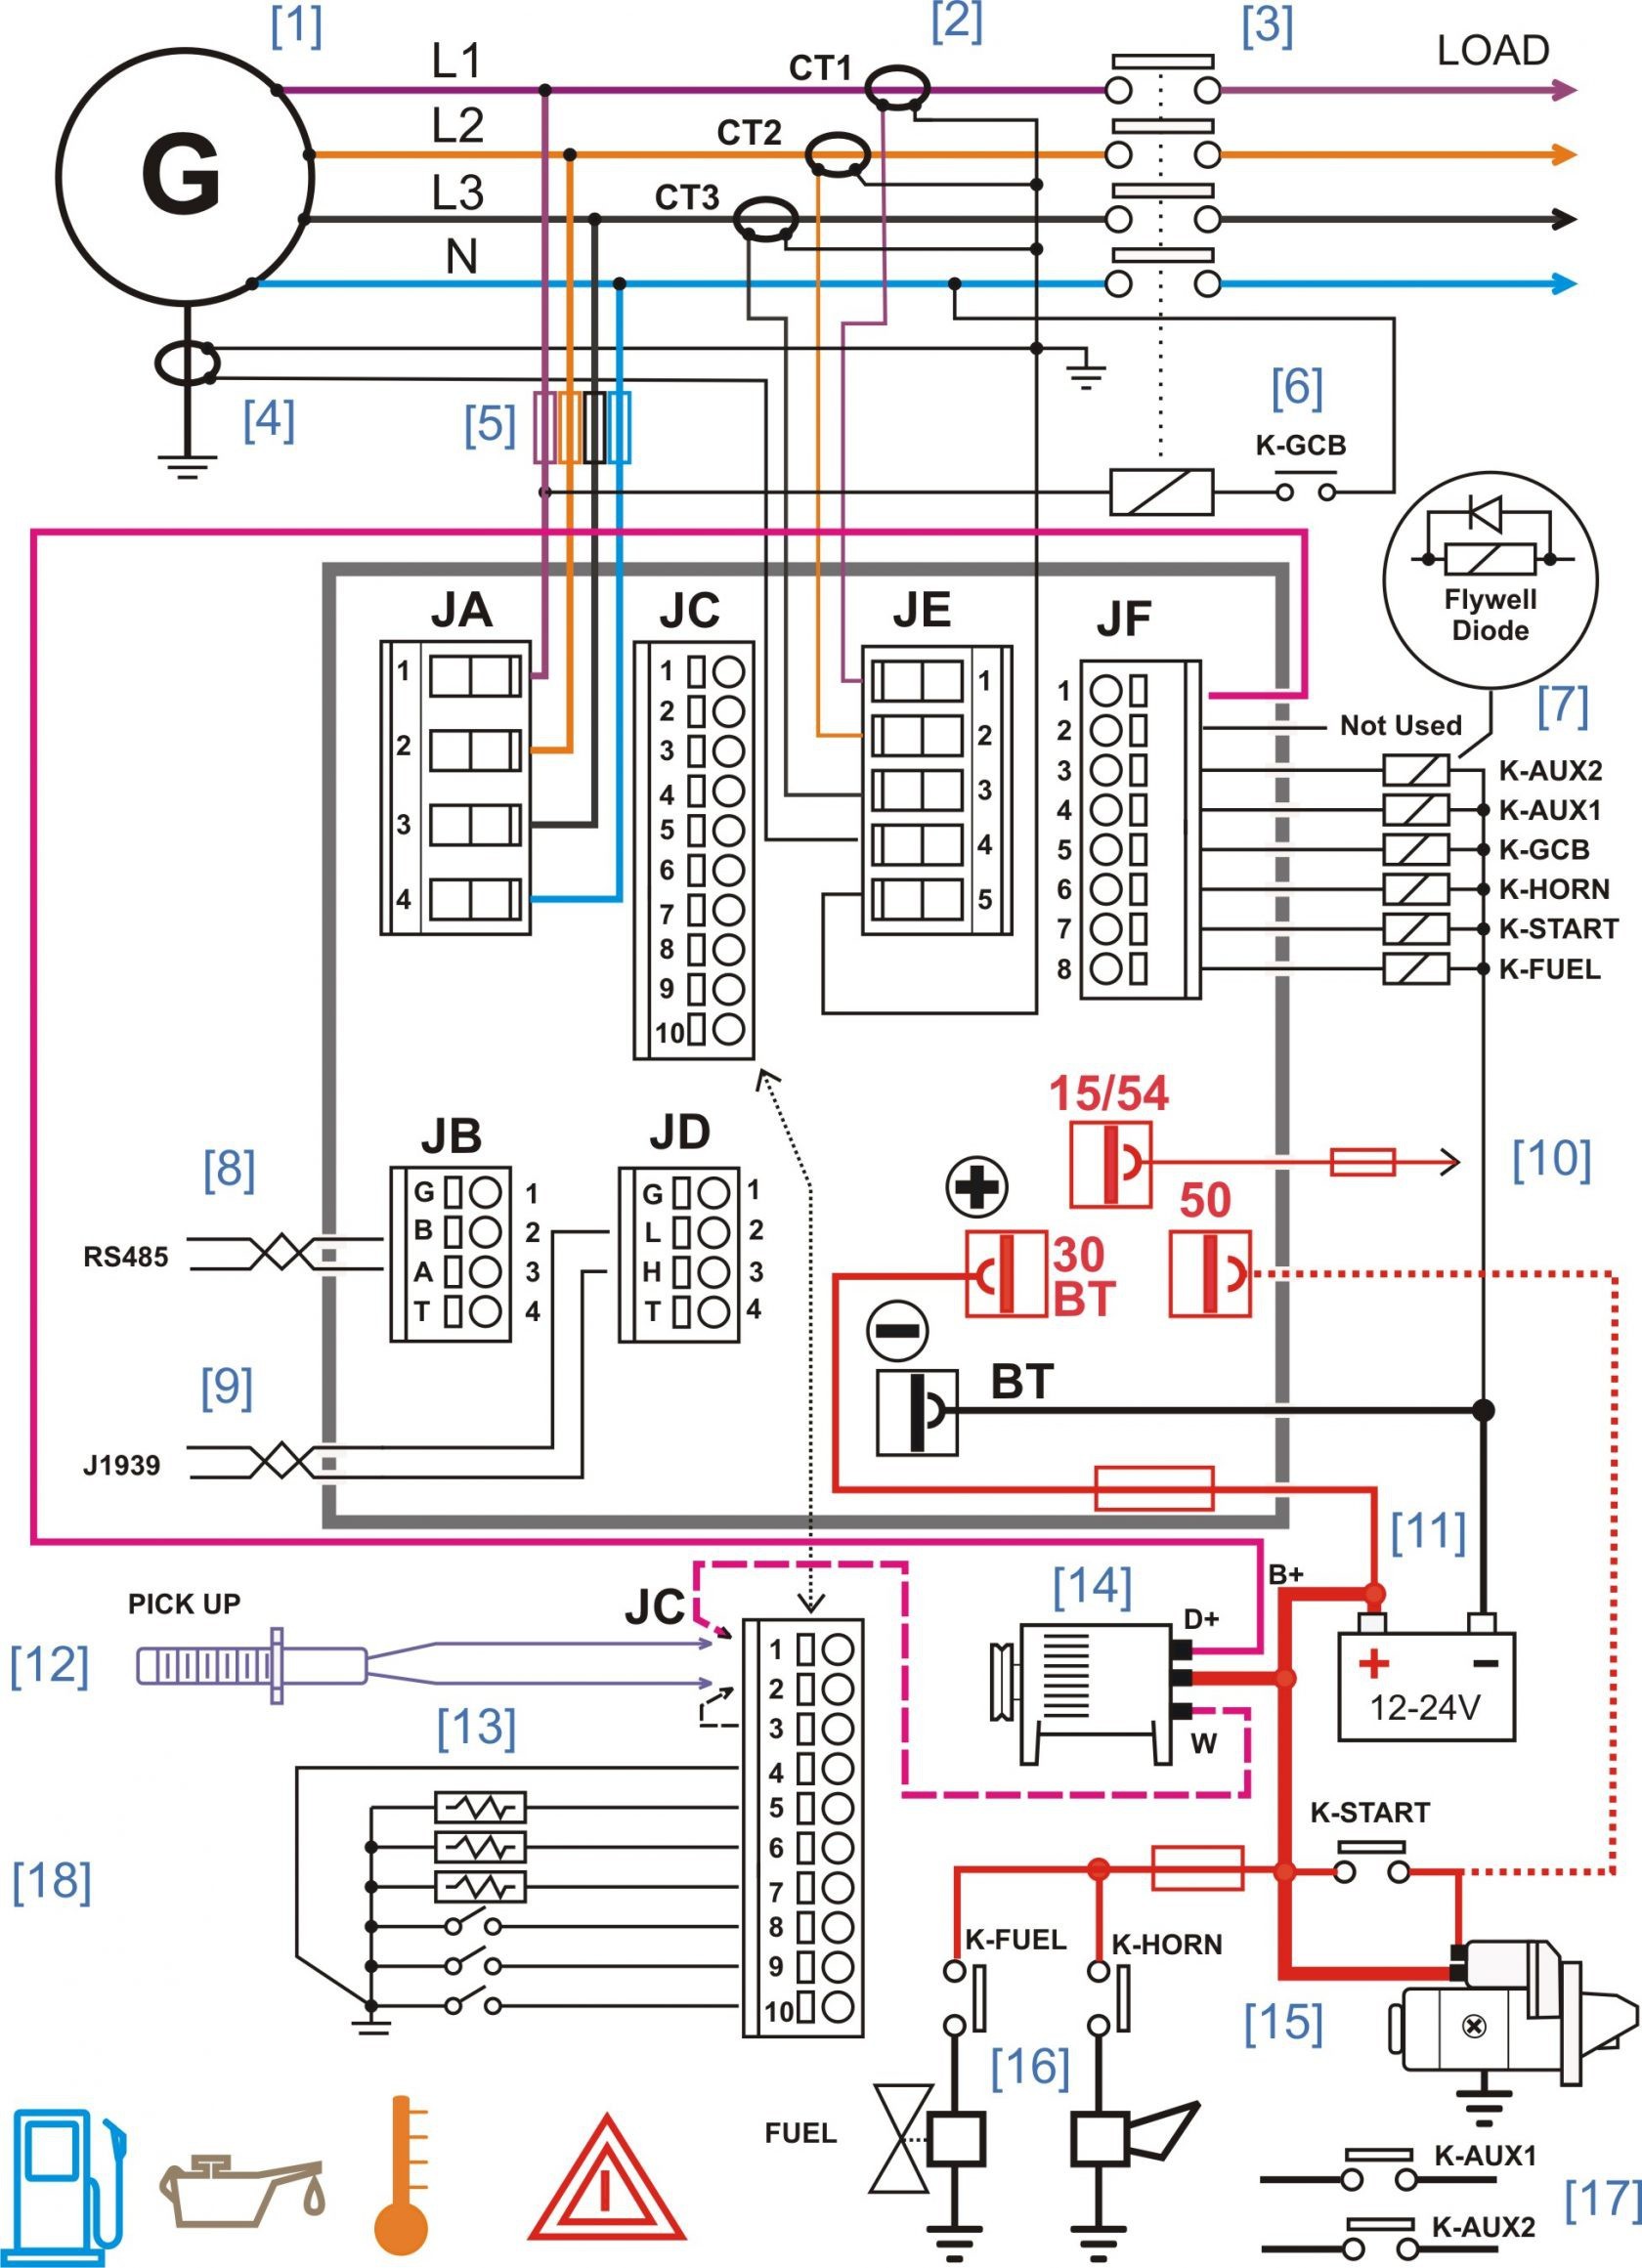 Rv Power Converter Wiring Diagram Unique Distribution Box Wiring Diagram Rv Inverter In Progressive